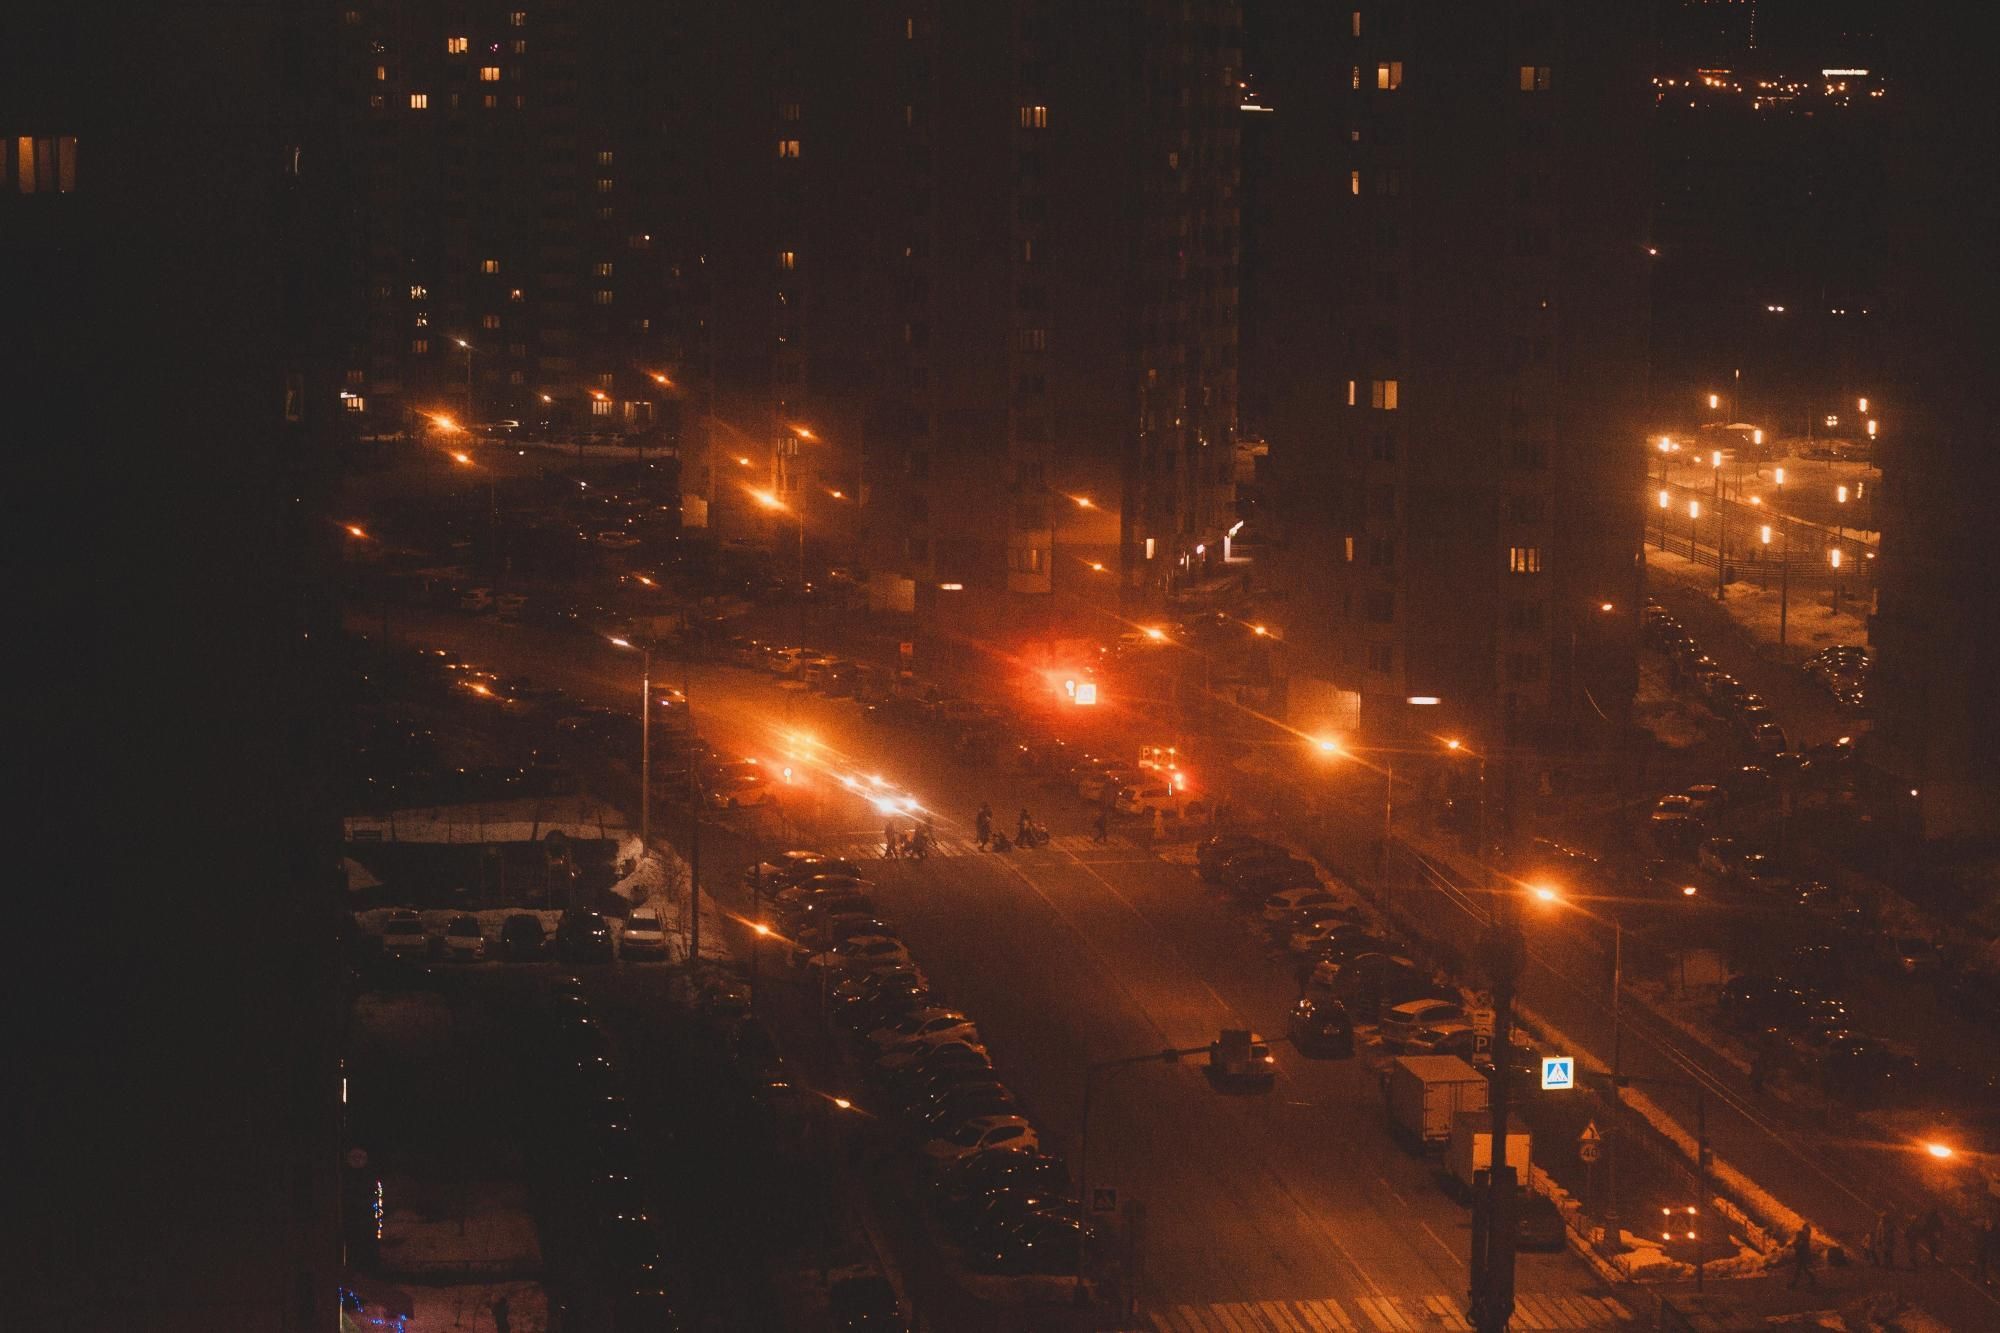 огни ночного города